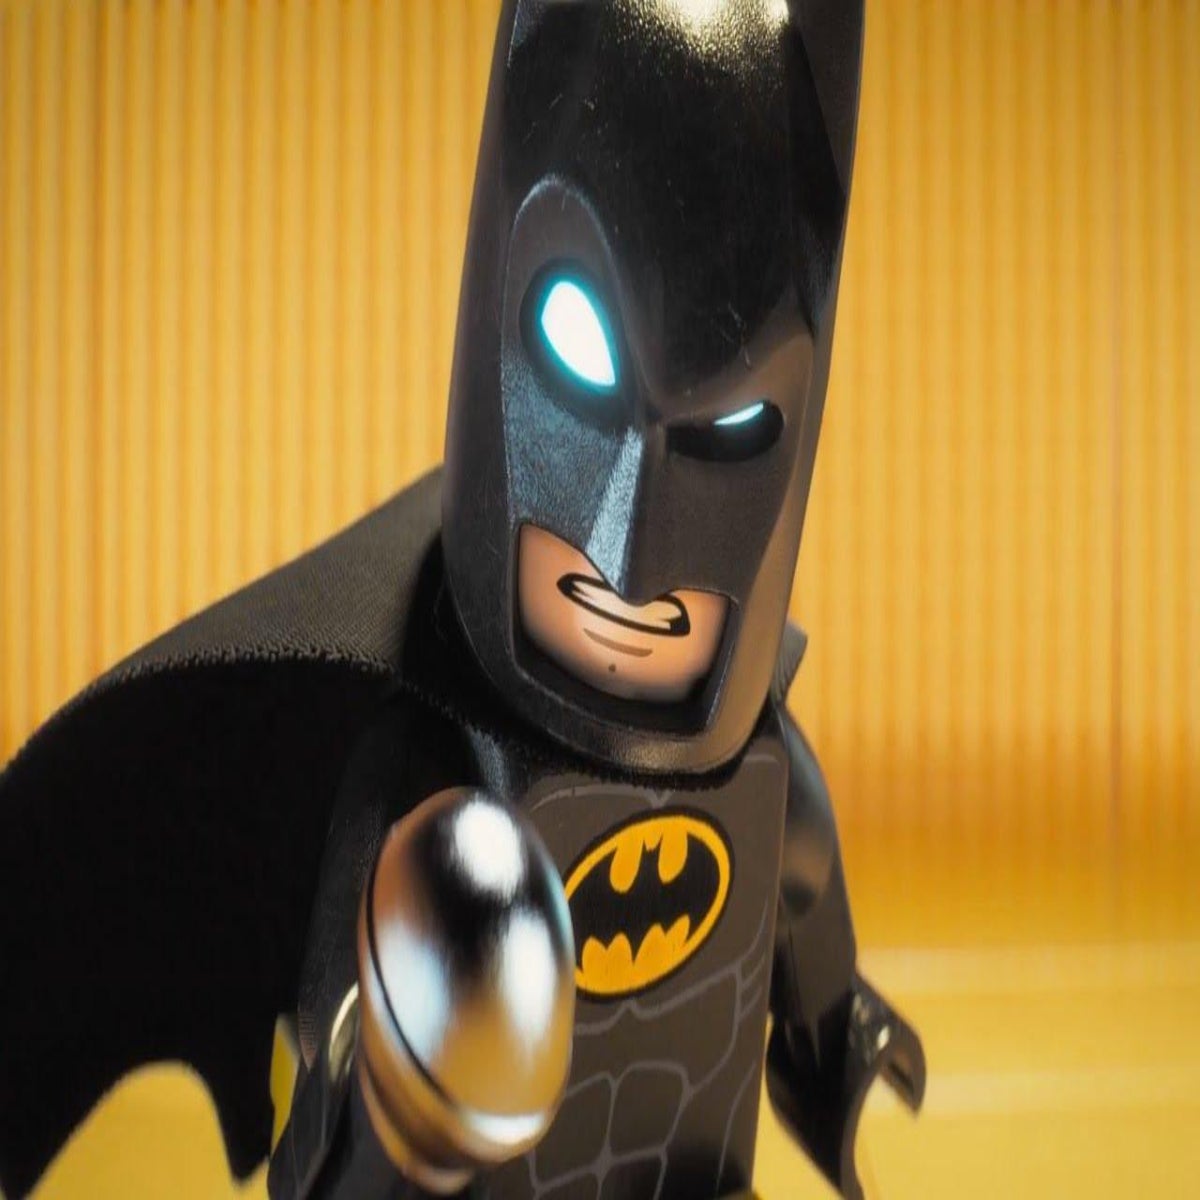 Lego Batman to Get His Own Movie